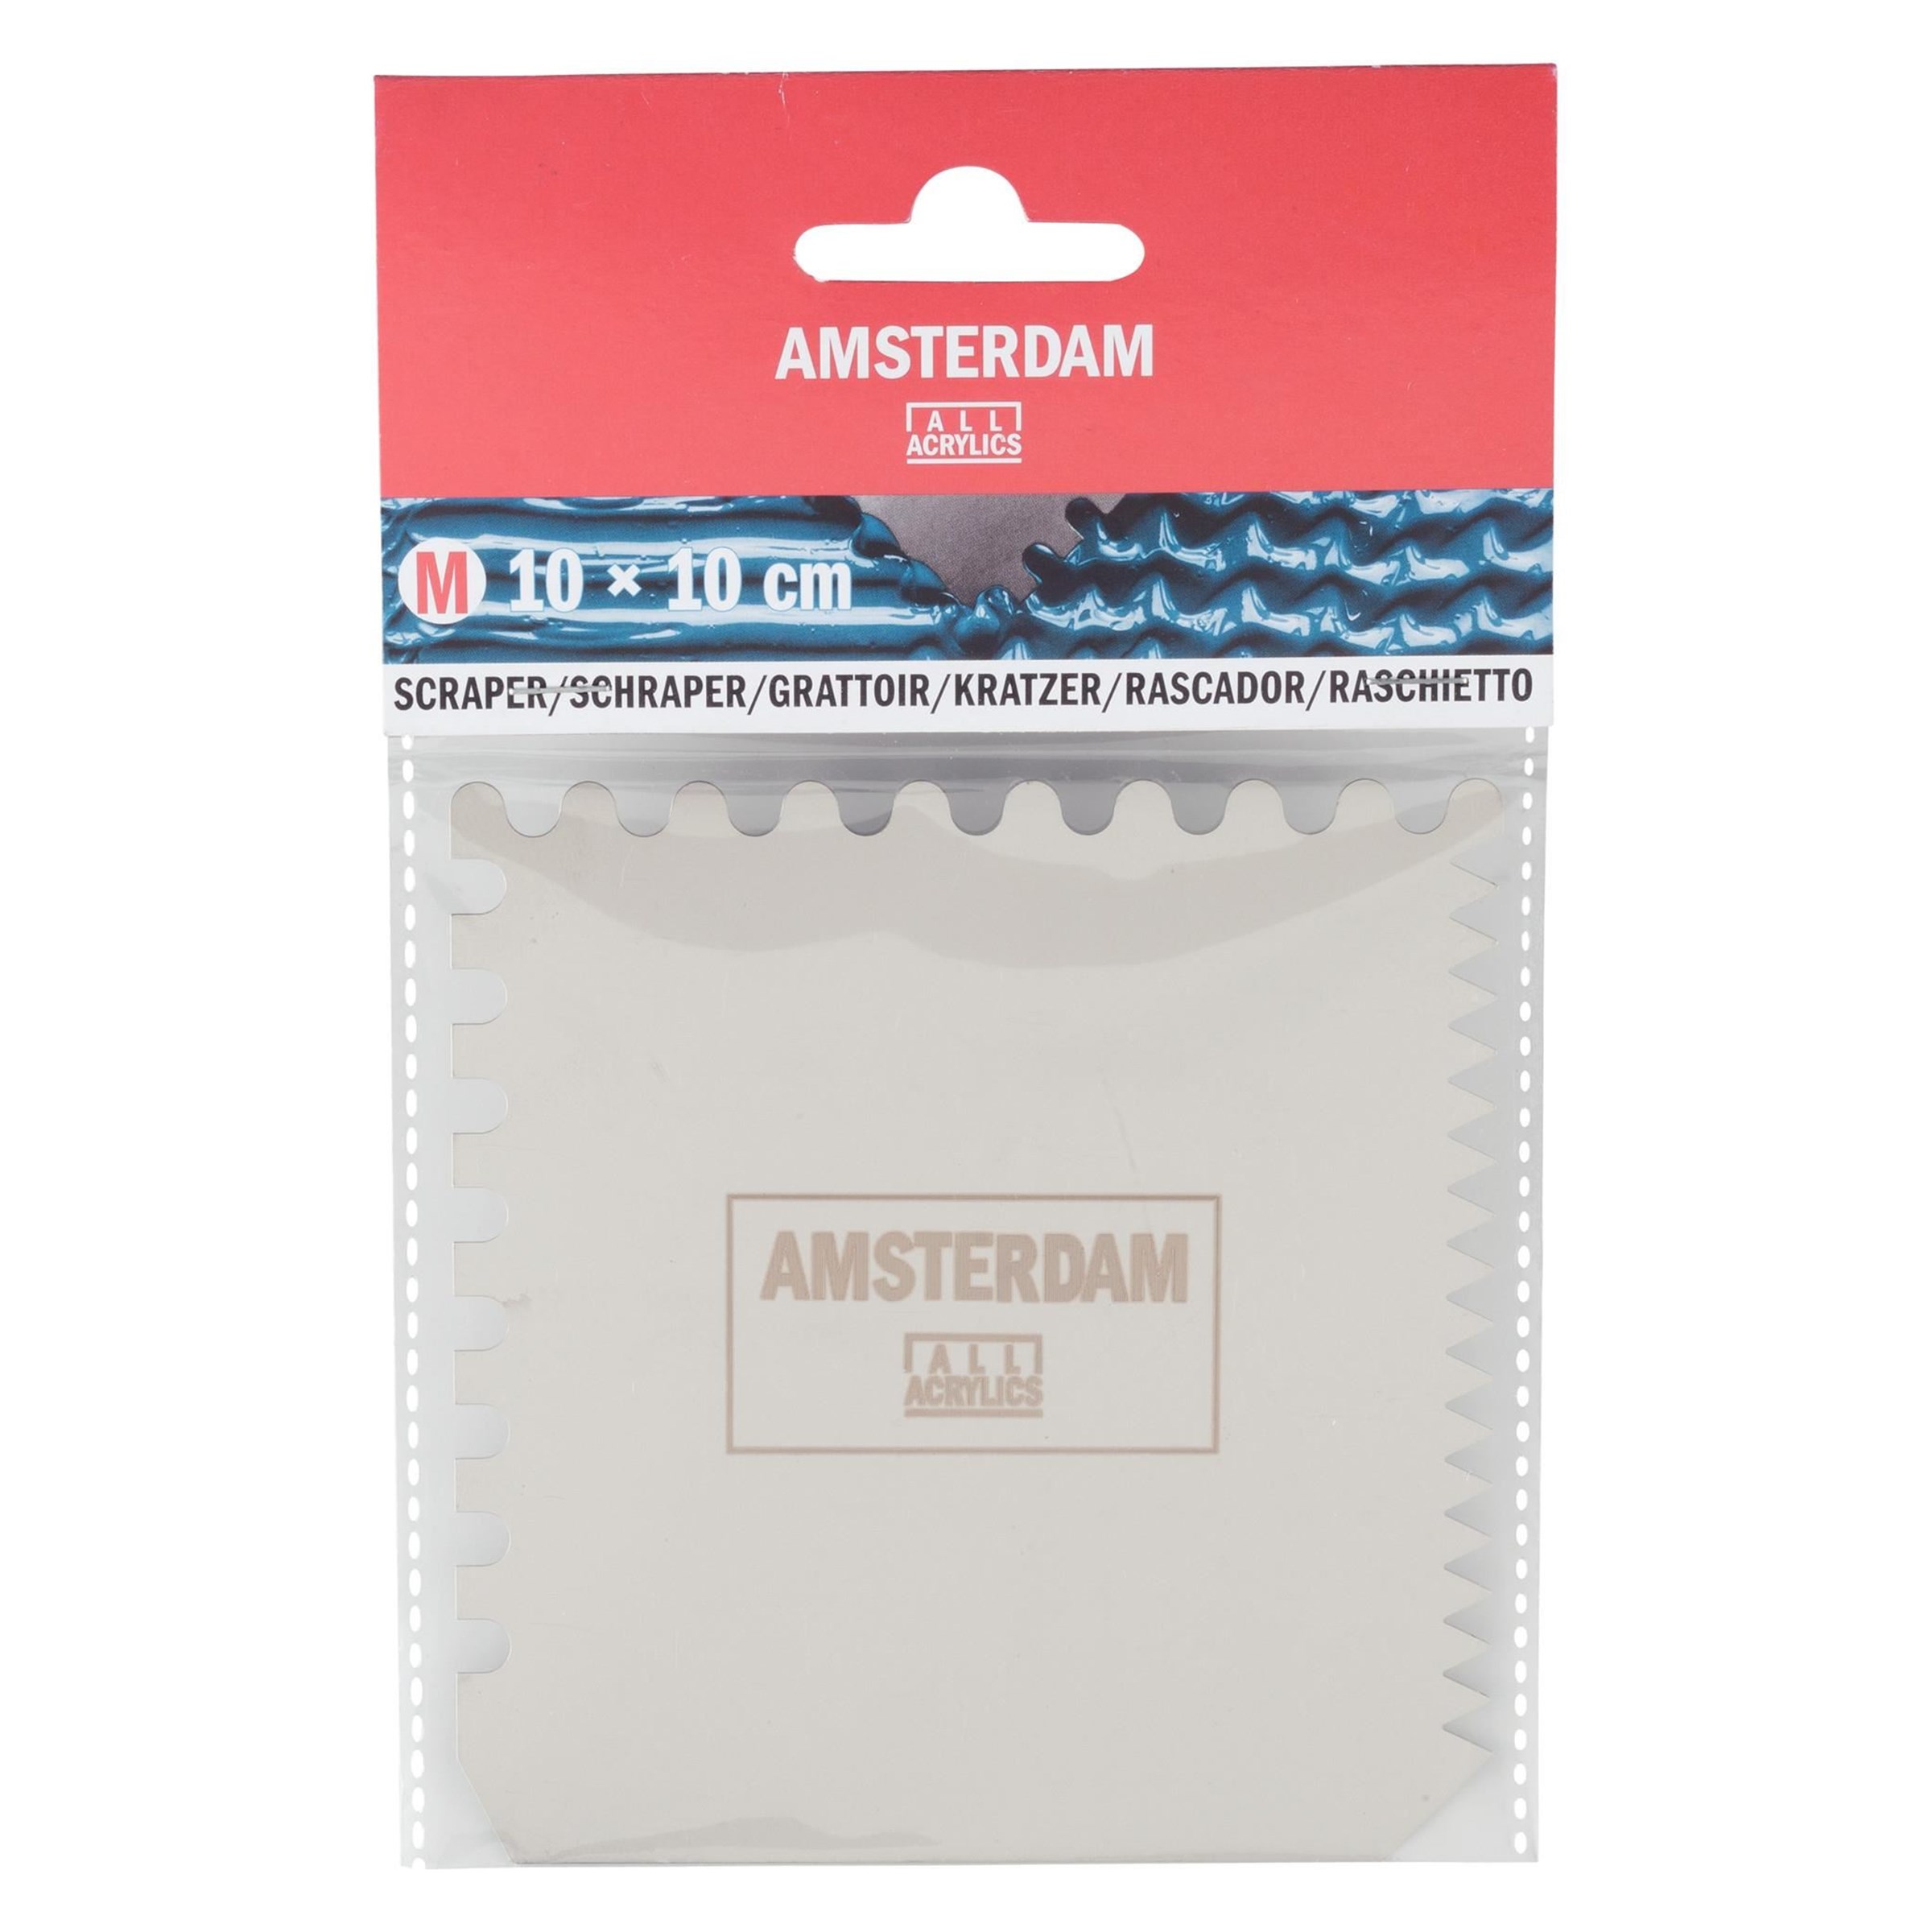   Amsterdam M 10*10